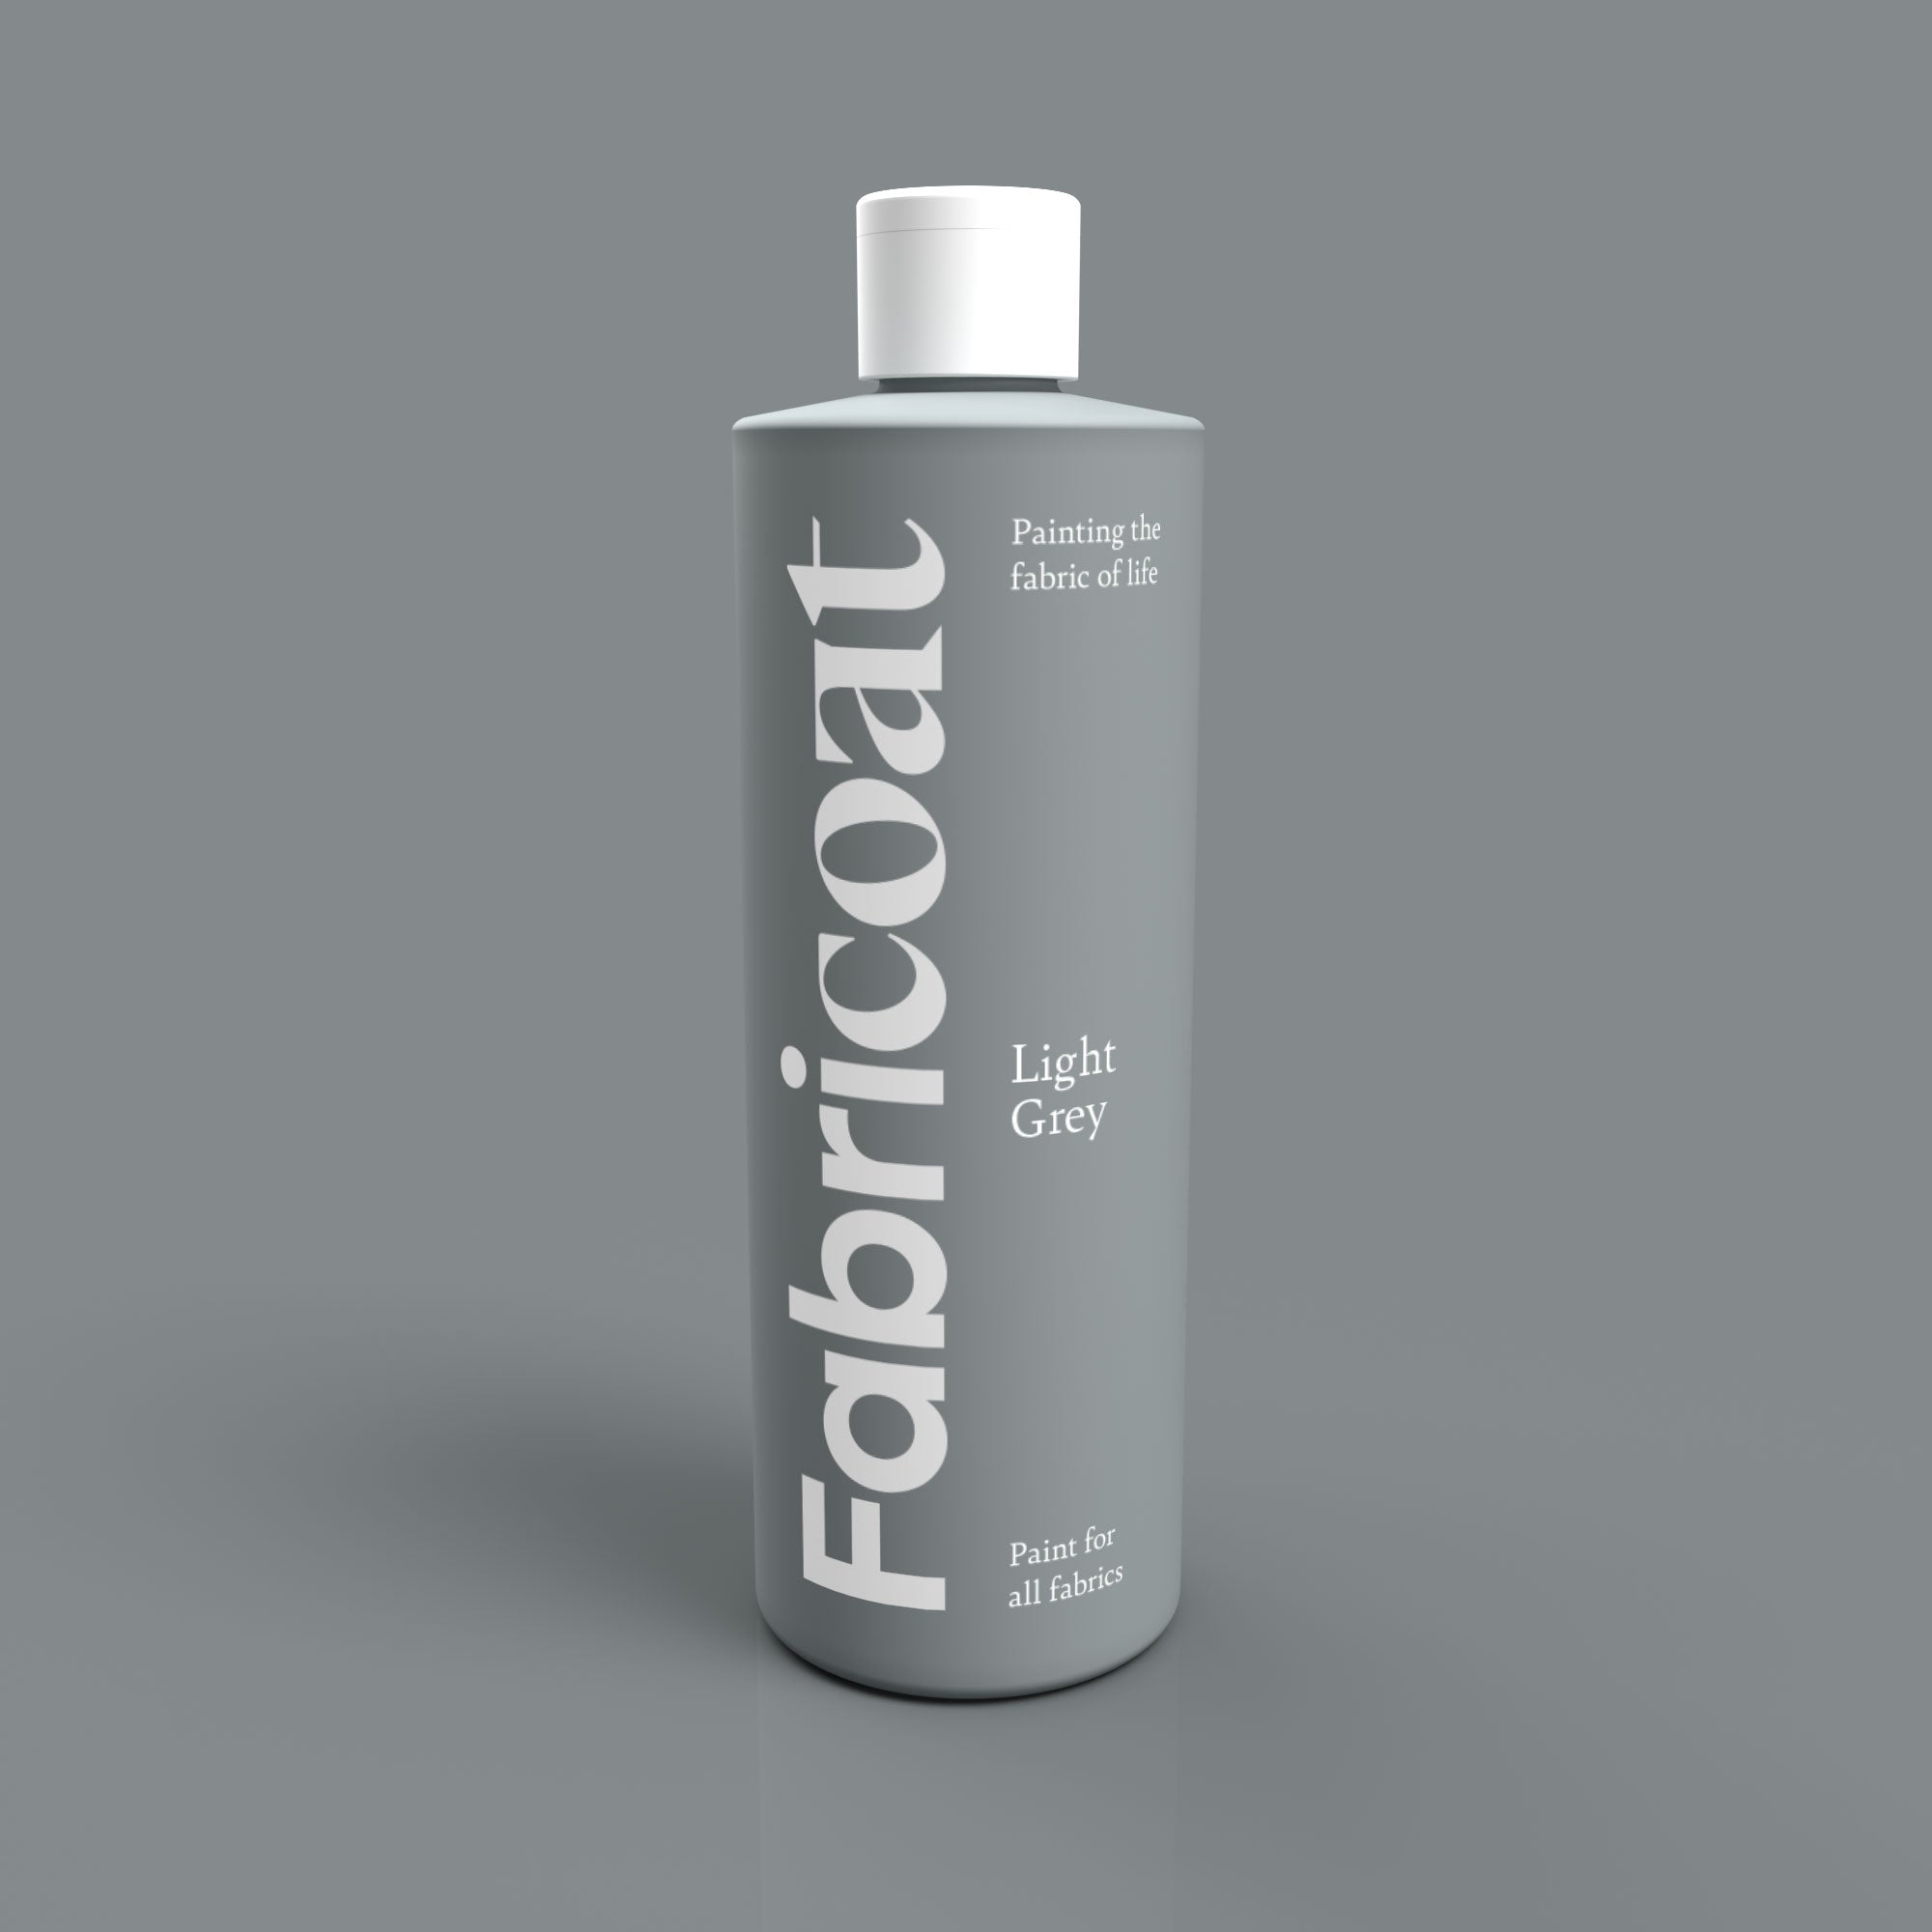 Fabricoat Light Grey Fabric Paint 500ml Bottle